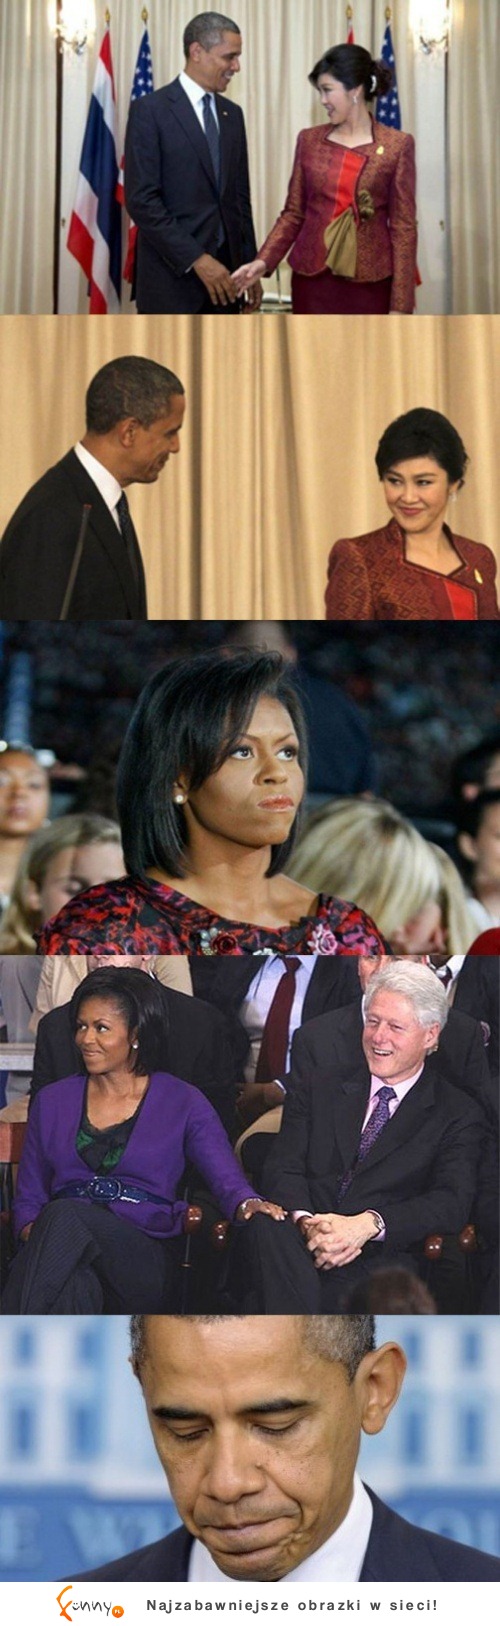 Obama i jego żona, chyba jest zazdrosna o ... :D